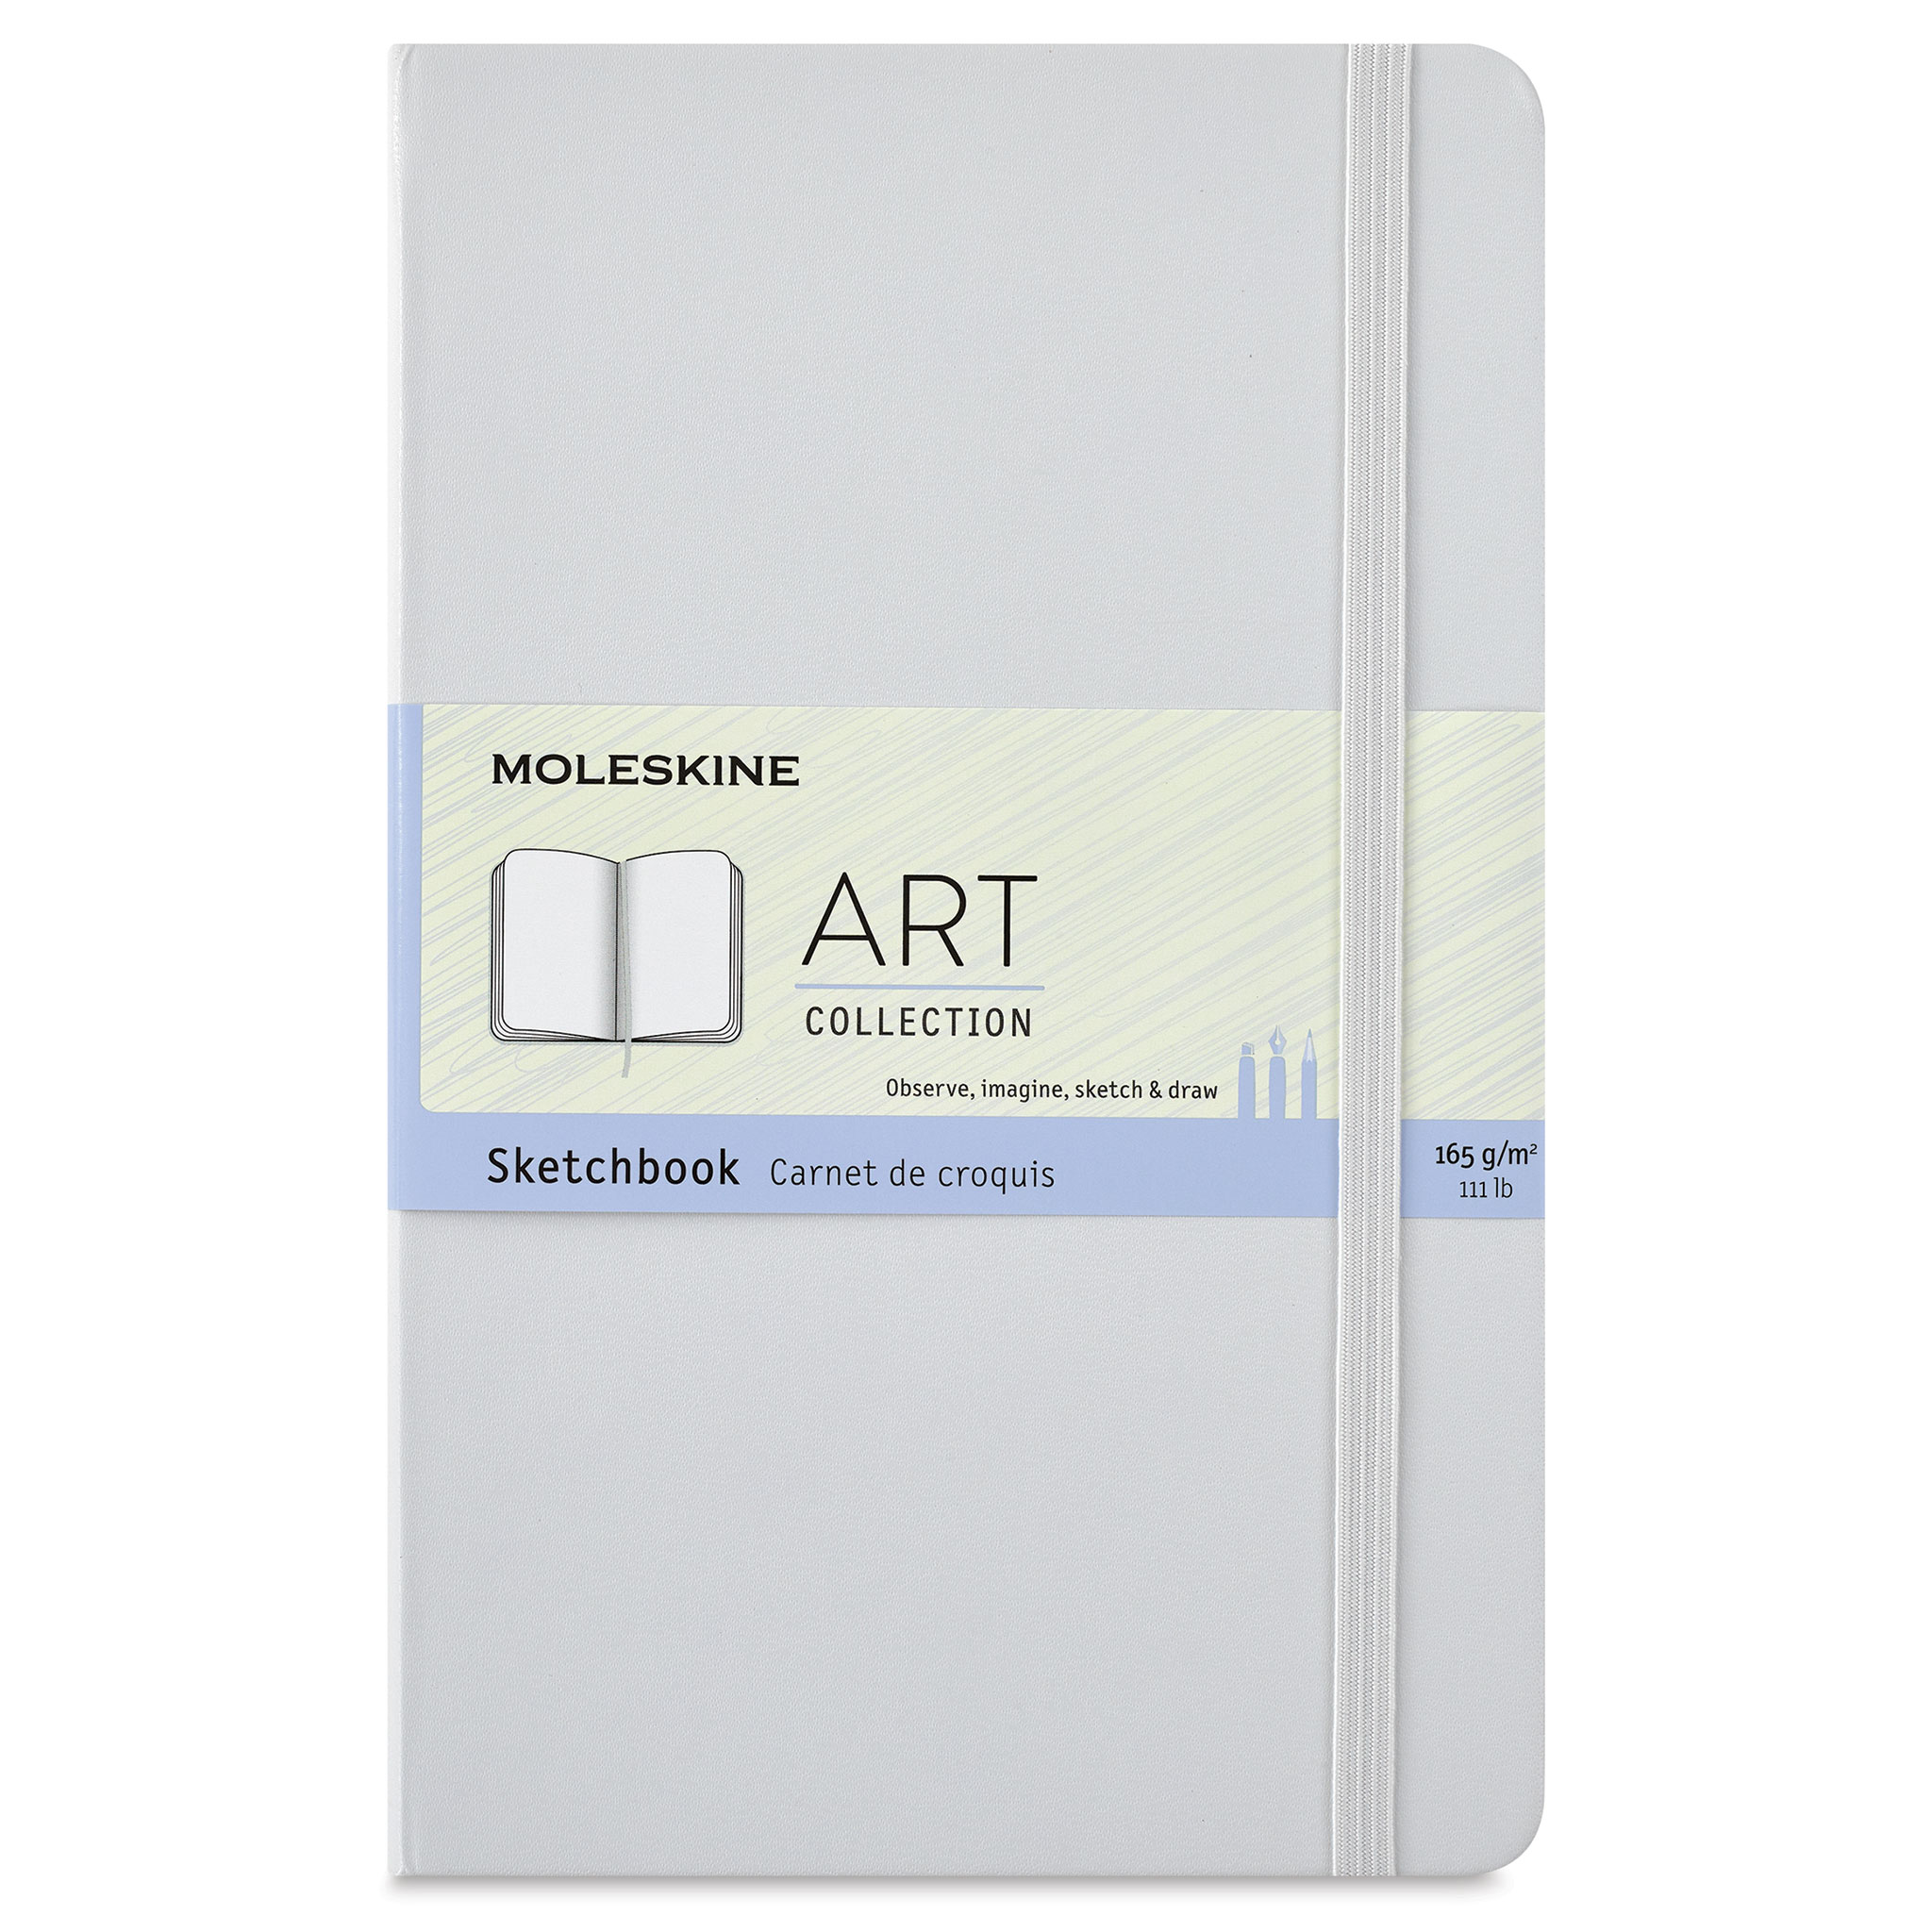 Moleskine Art Collection Sketchbook - Cool Gray, 5 x 8-1/4